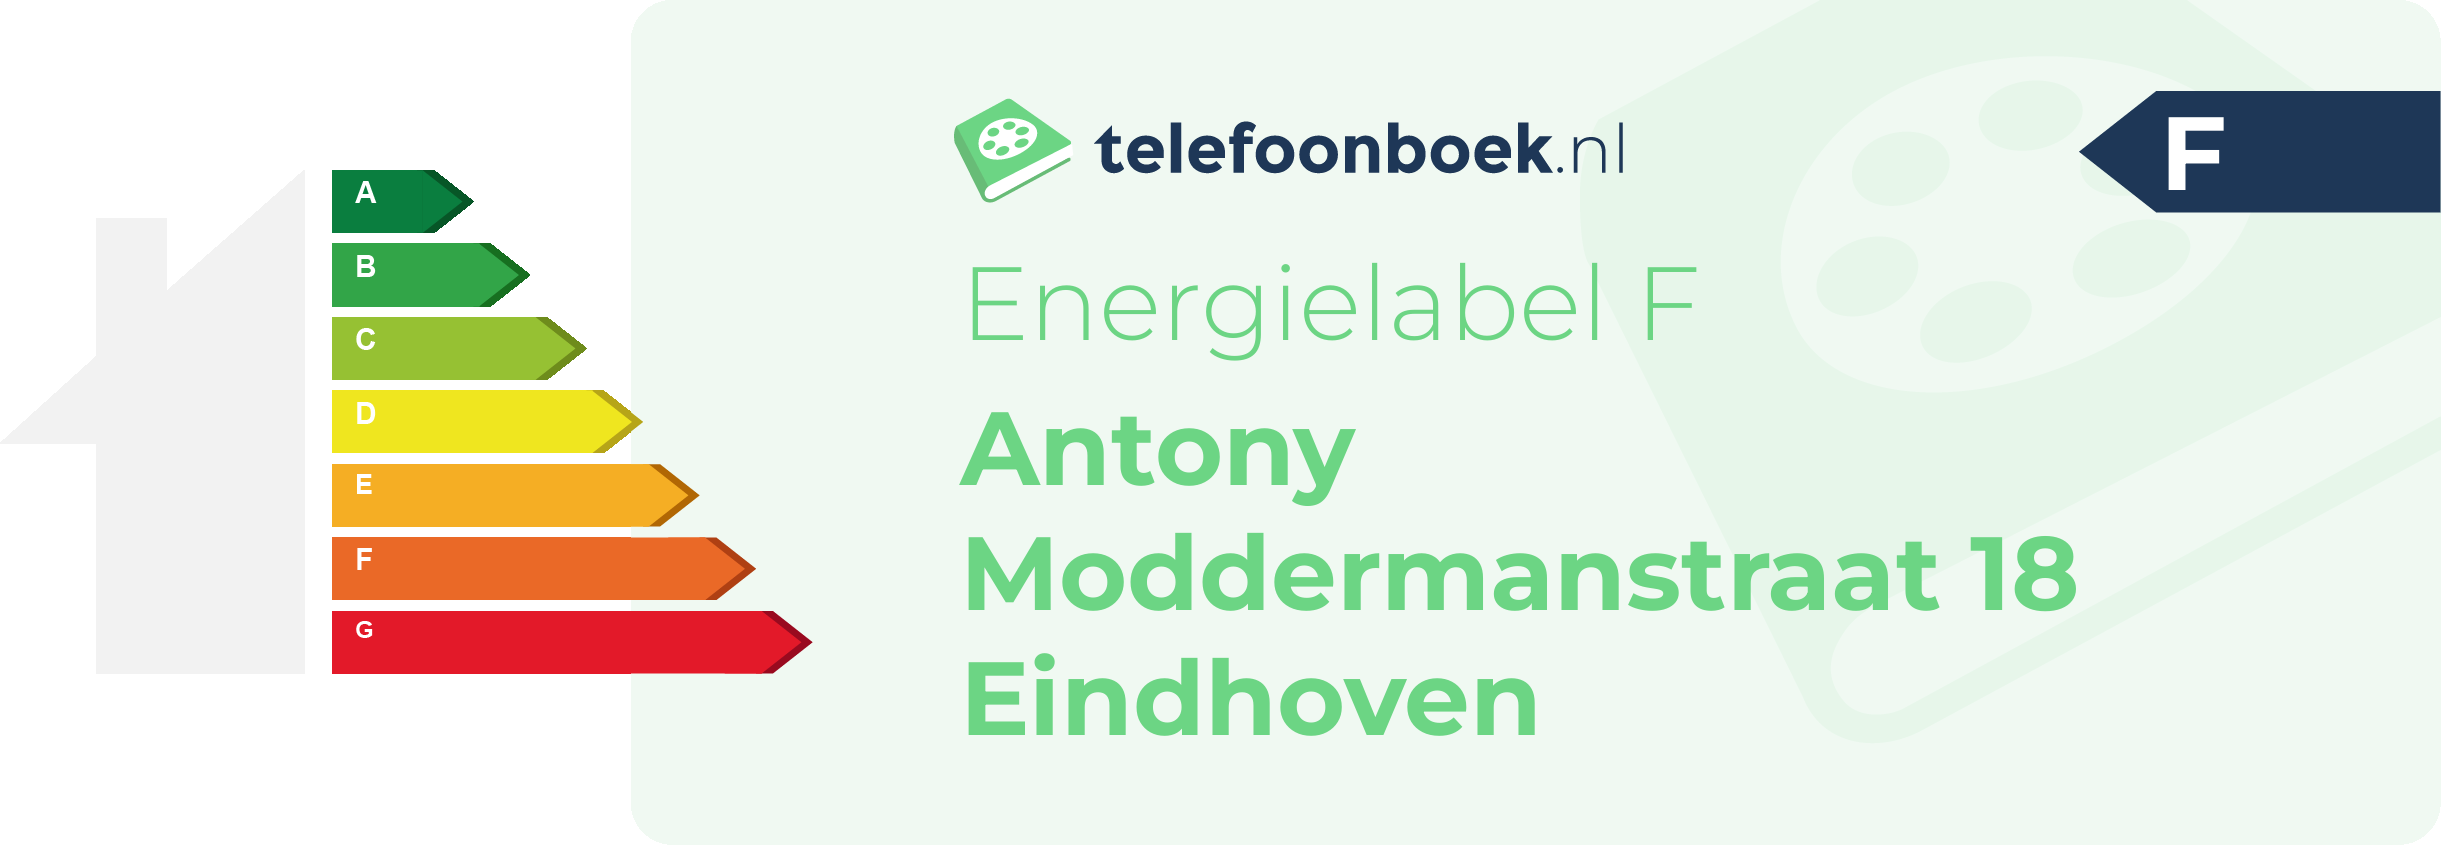 Energielabel Antony Moddermanstraat 18 Eindhoven